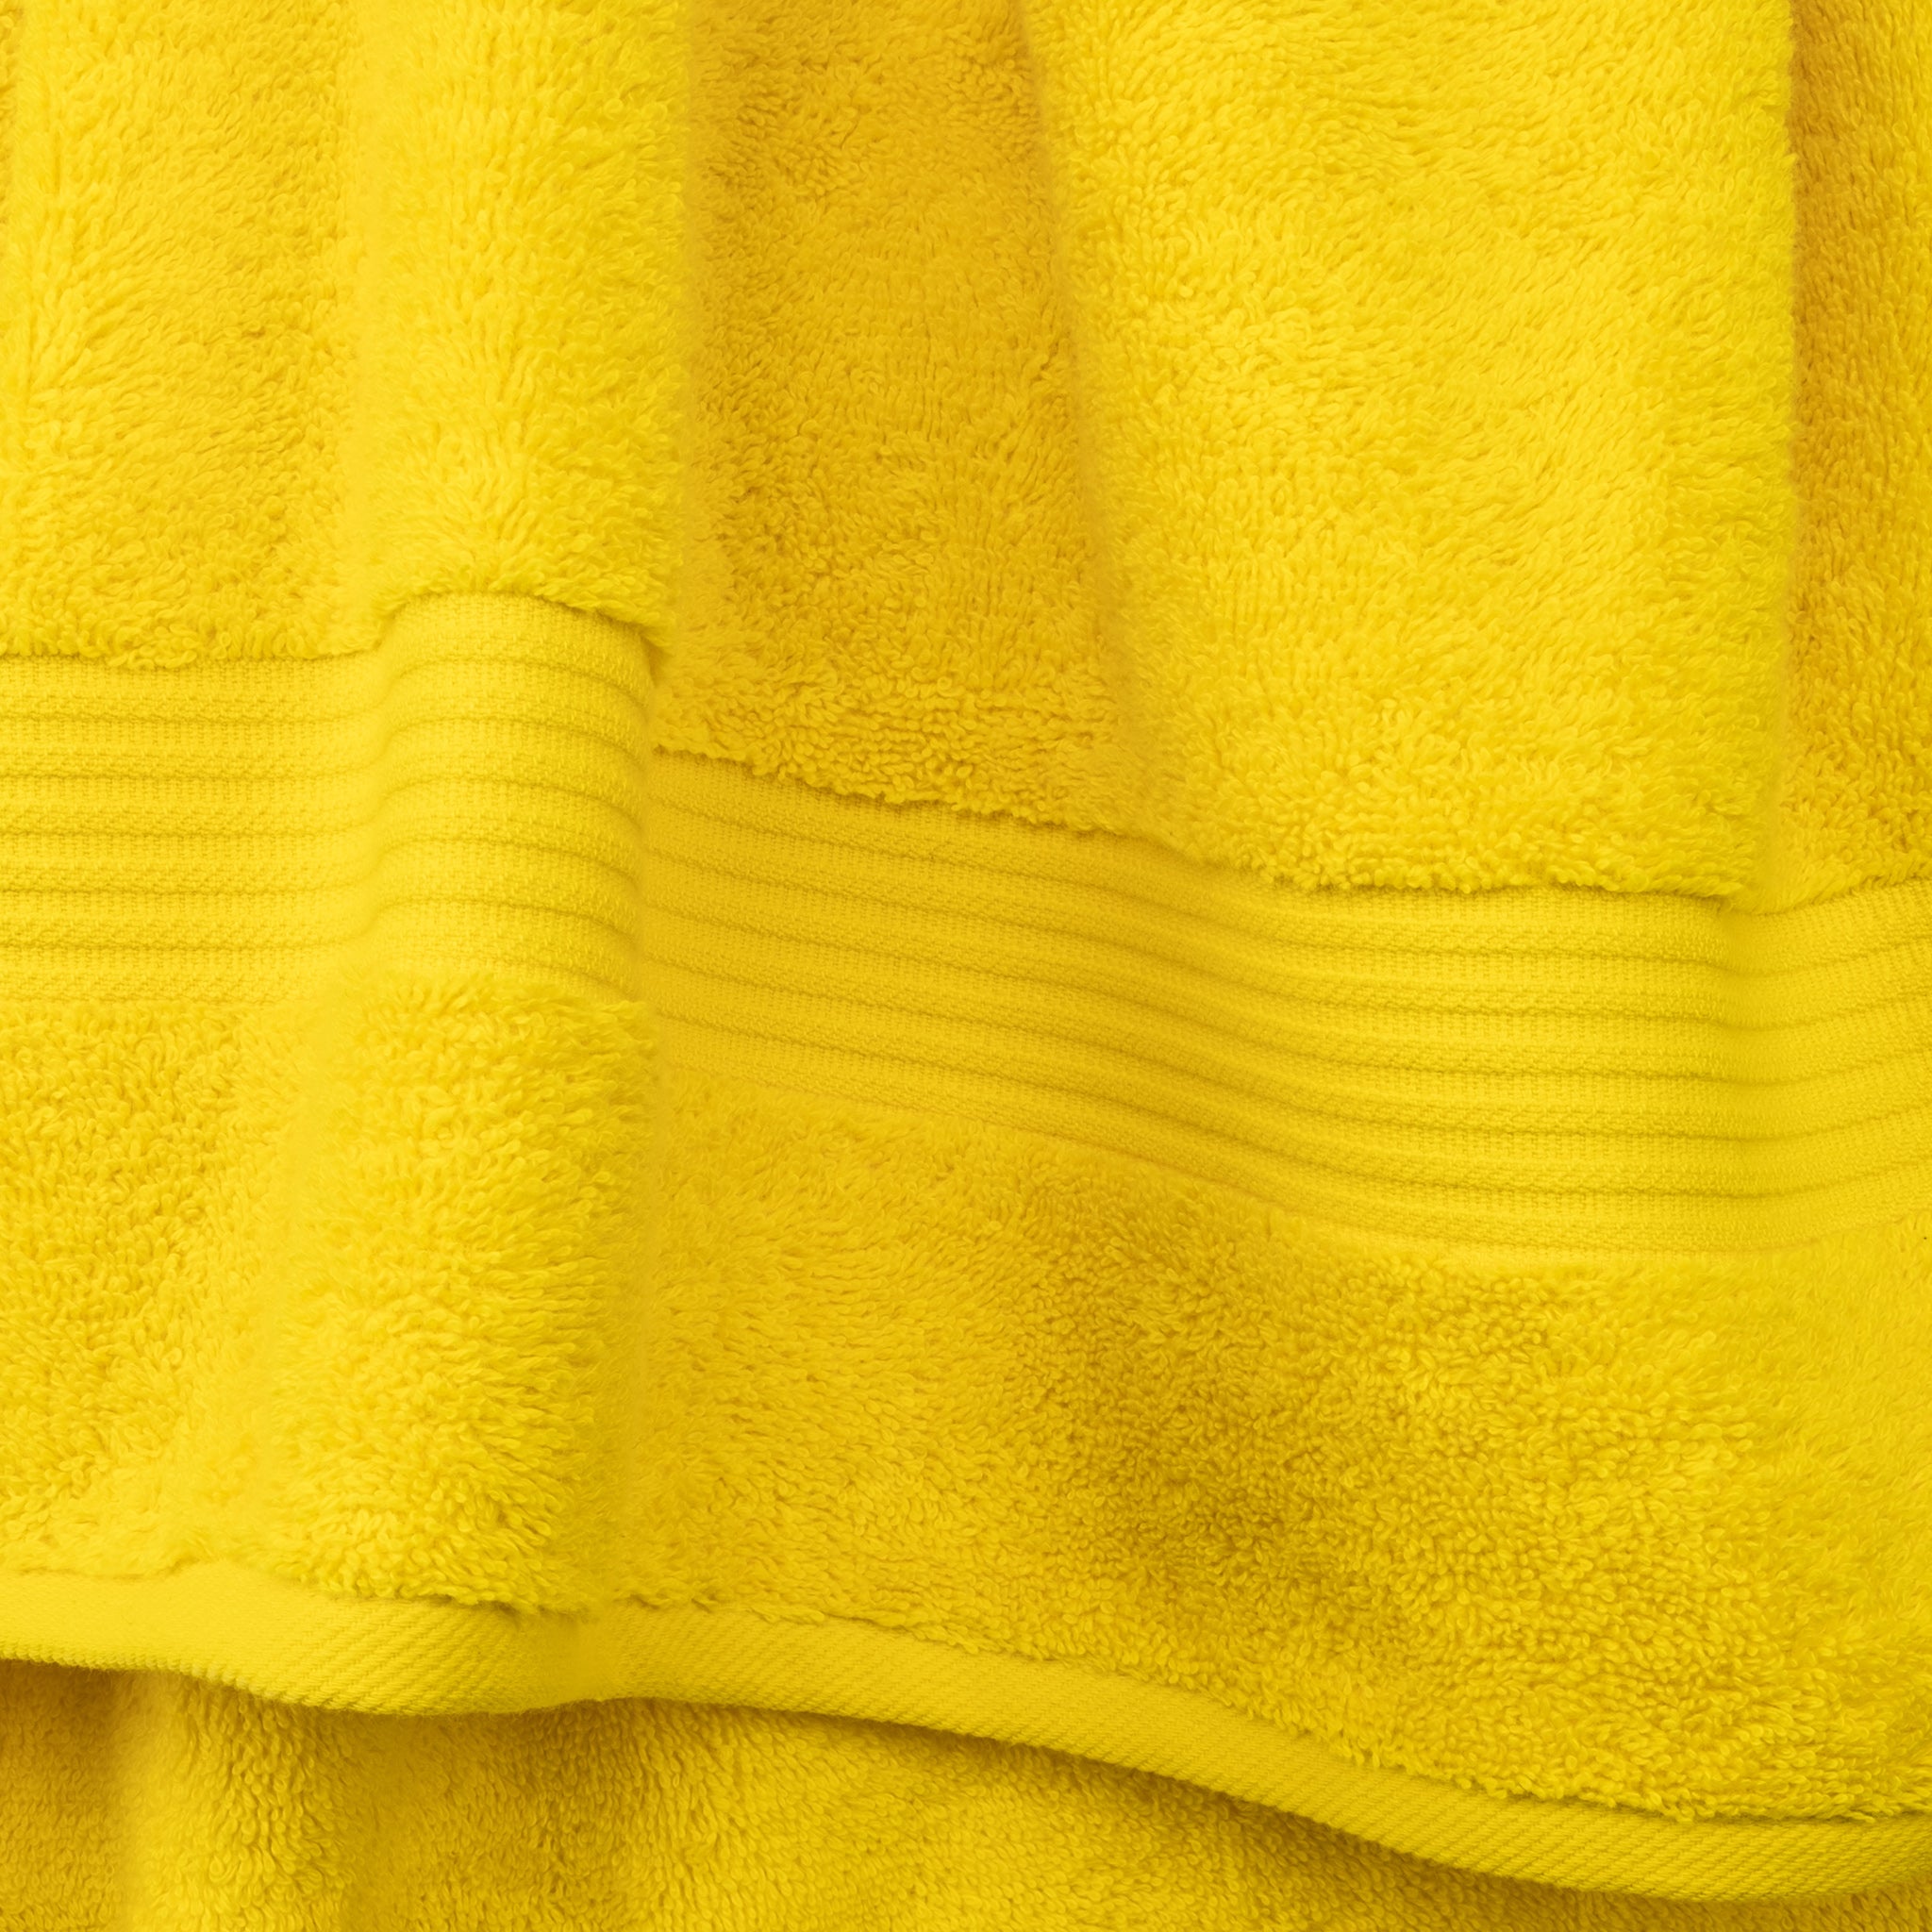 American Soft Linen Bekos 100% Cotton Turkish Towels, 4 Piece Hand Towel Set -yellow-03